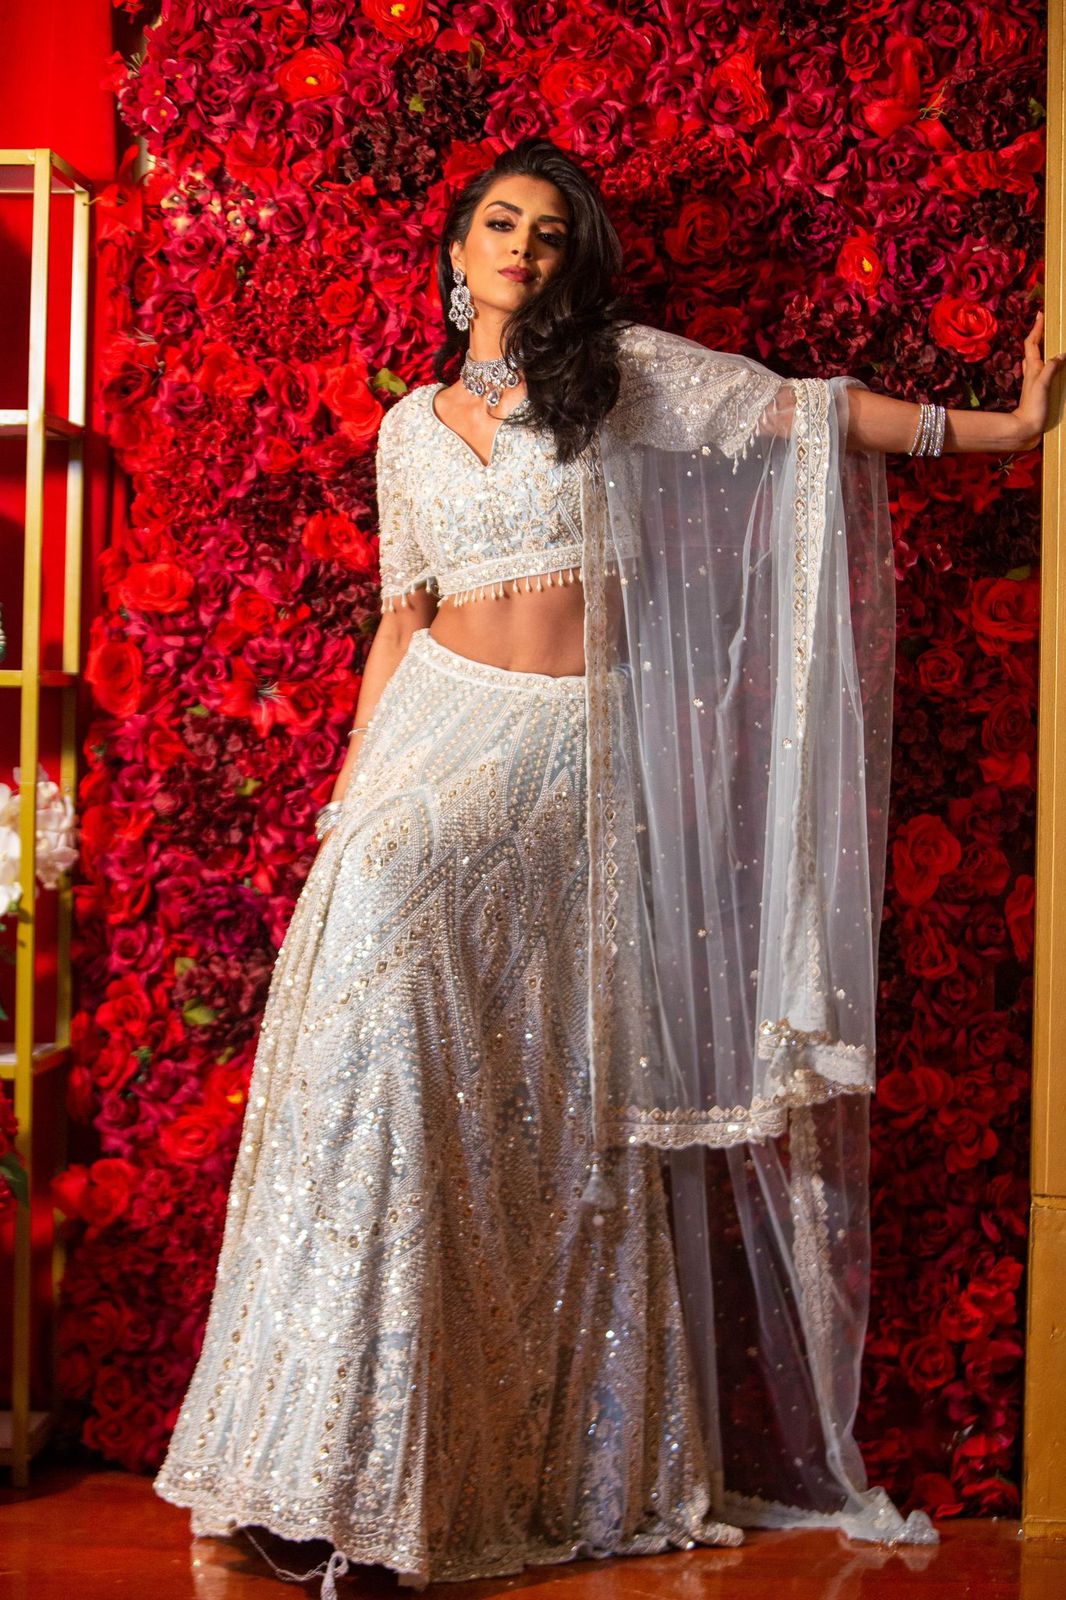 Lehenga Designs for Sangeet Nights: Indian Bridal Attire